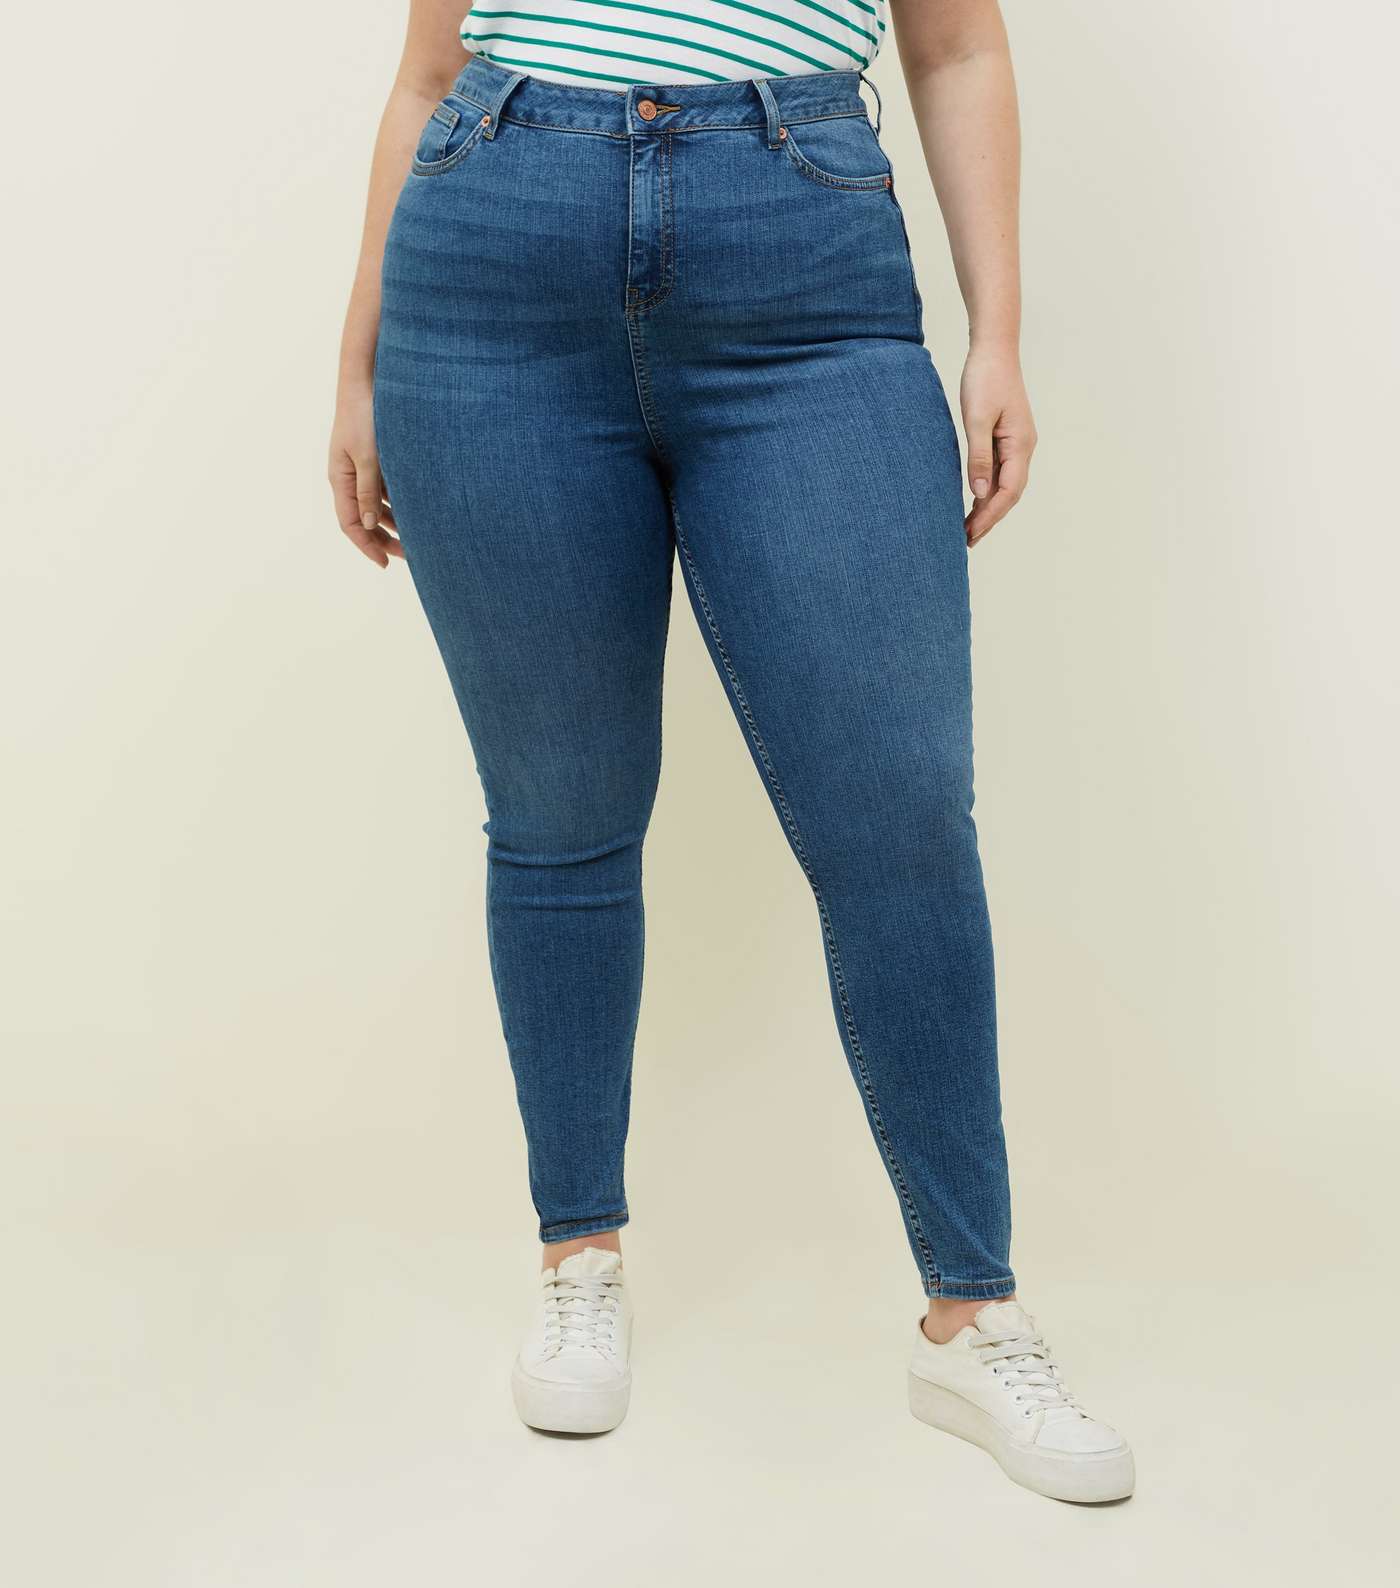 Curves Blue 'Lift & Shape' Jenna Skinny Jeans Image 2